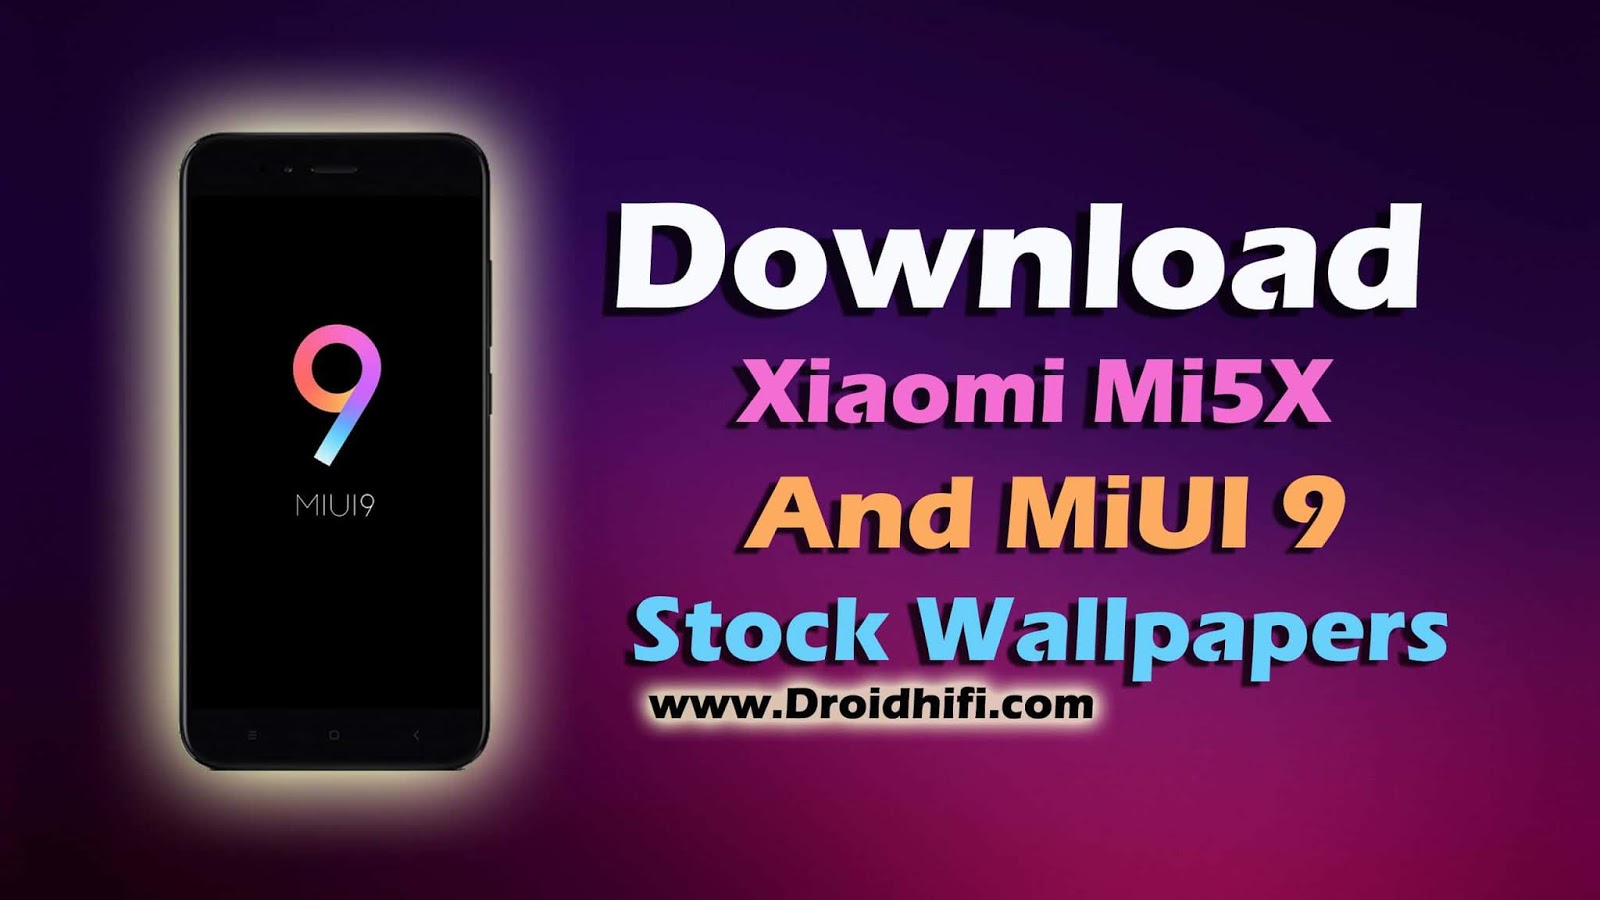 Download Xiaomi Mi5x And Miui 9 Stock Wallpapers - Bodyboard - HD Wallpaper 